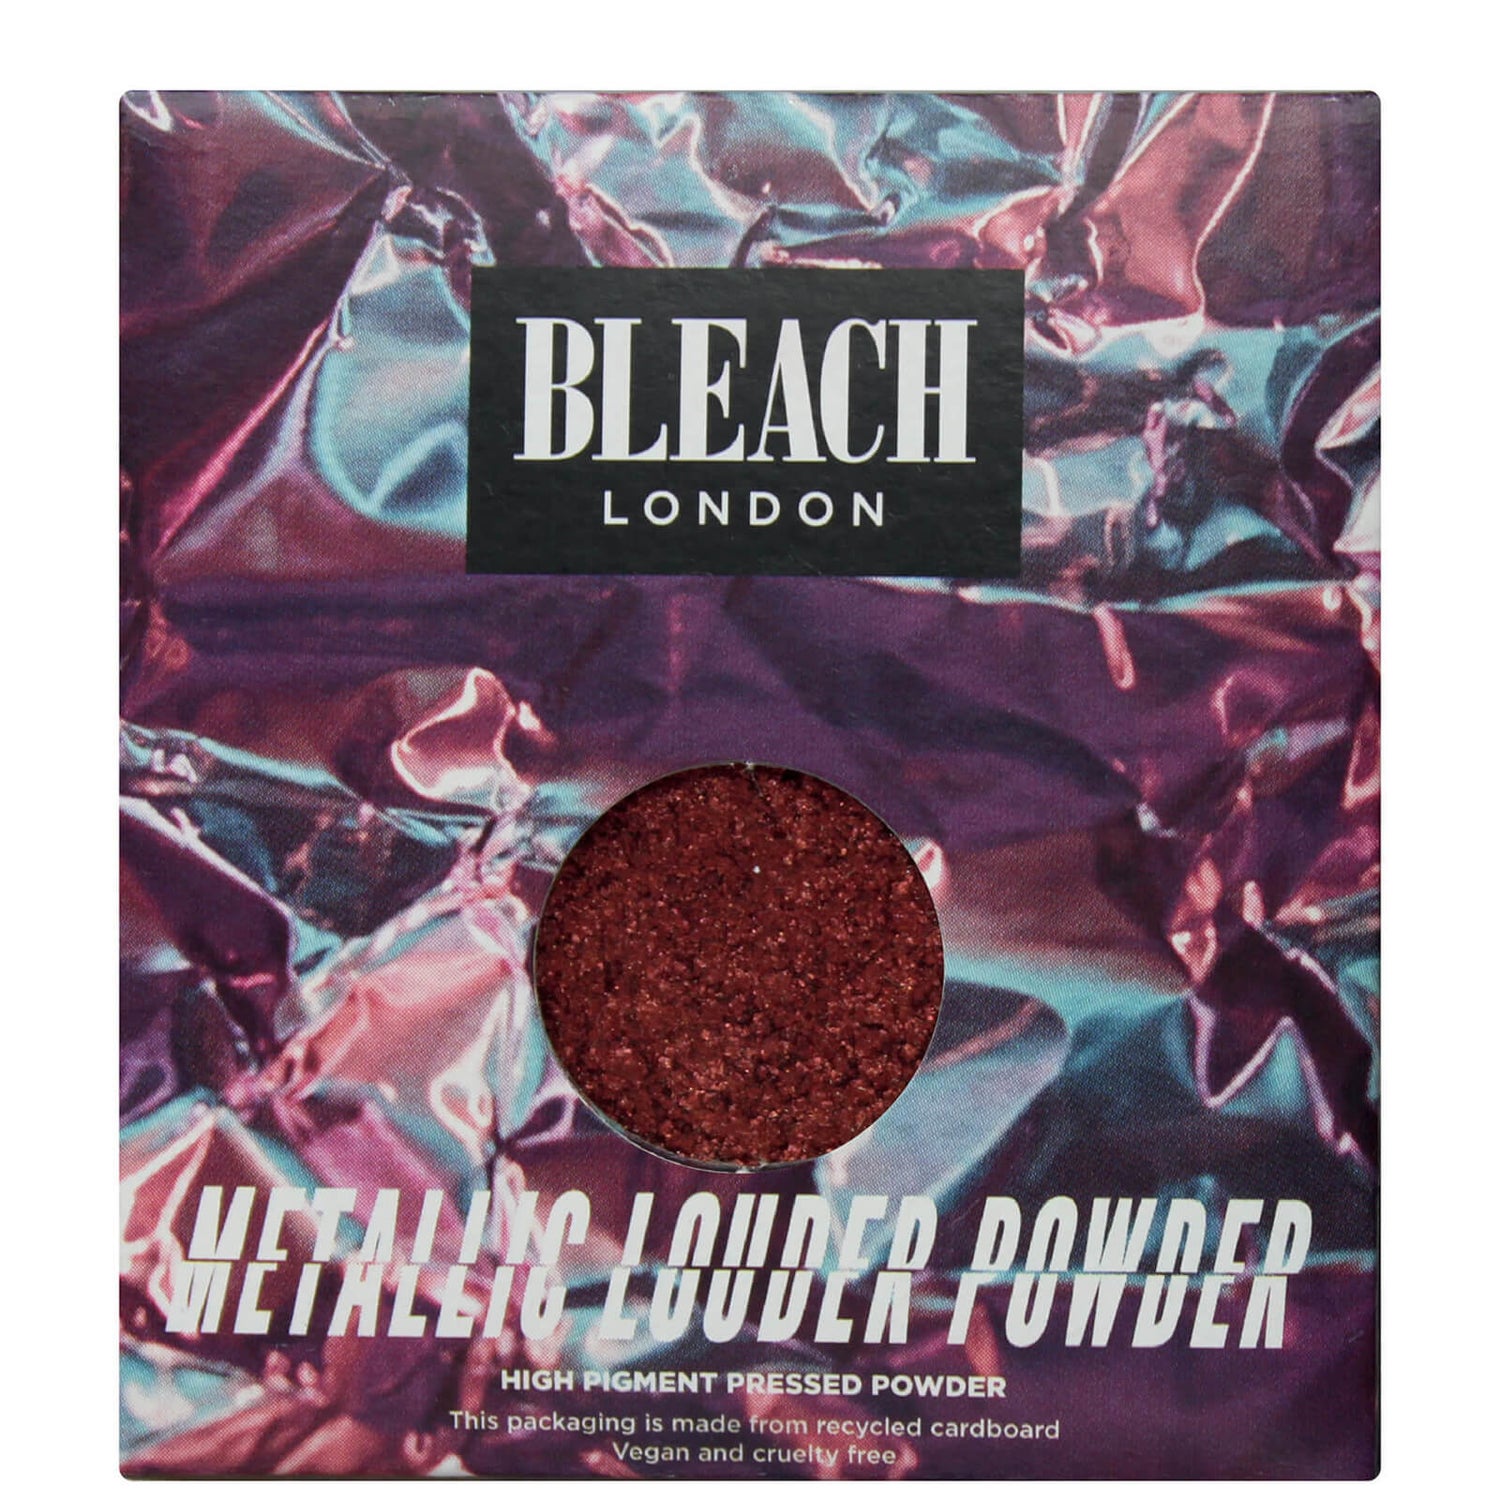 Sombra de Olhos Metallic Louder Powder Isr 4 Me da BLEACH LONDON